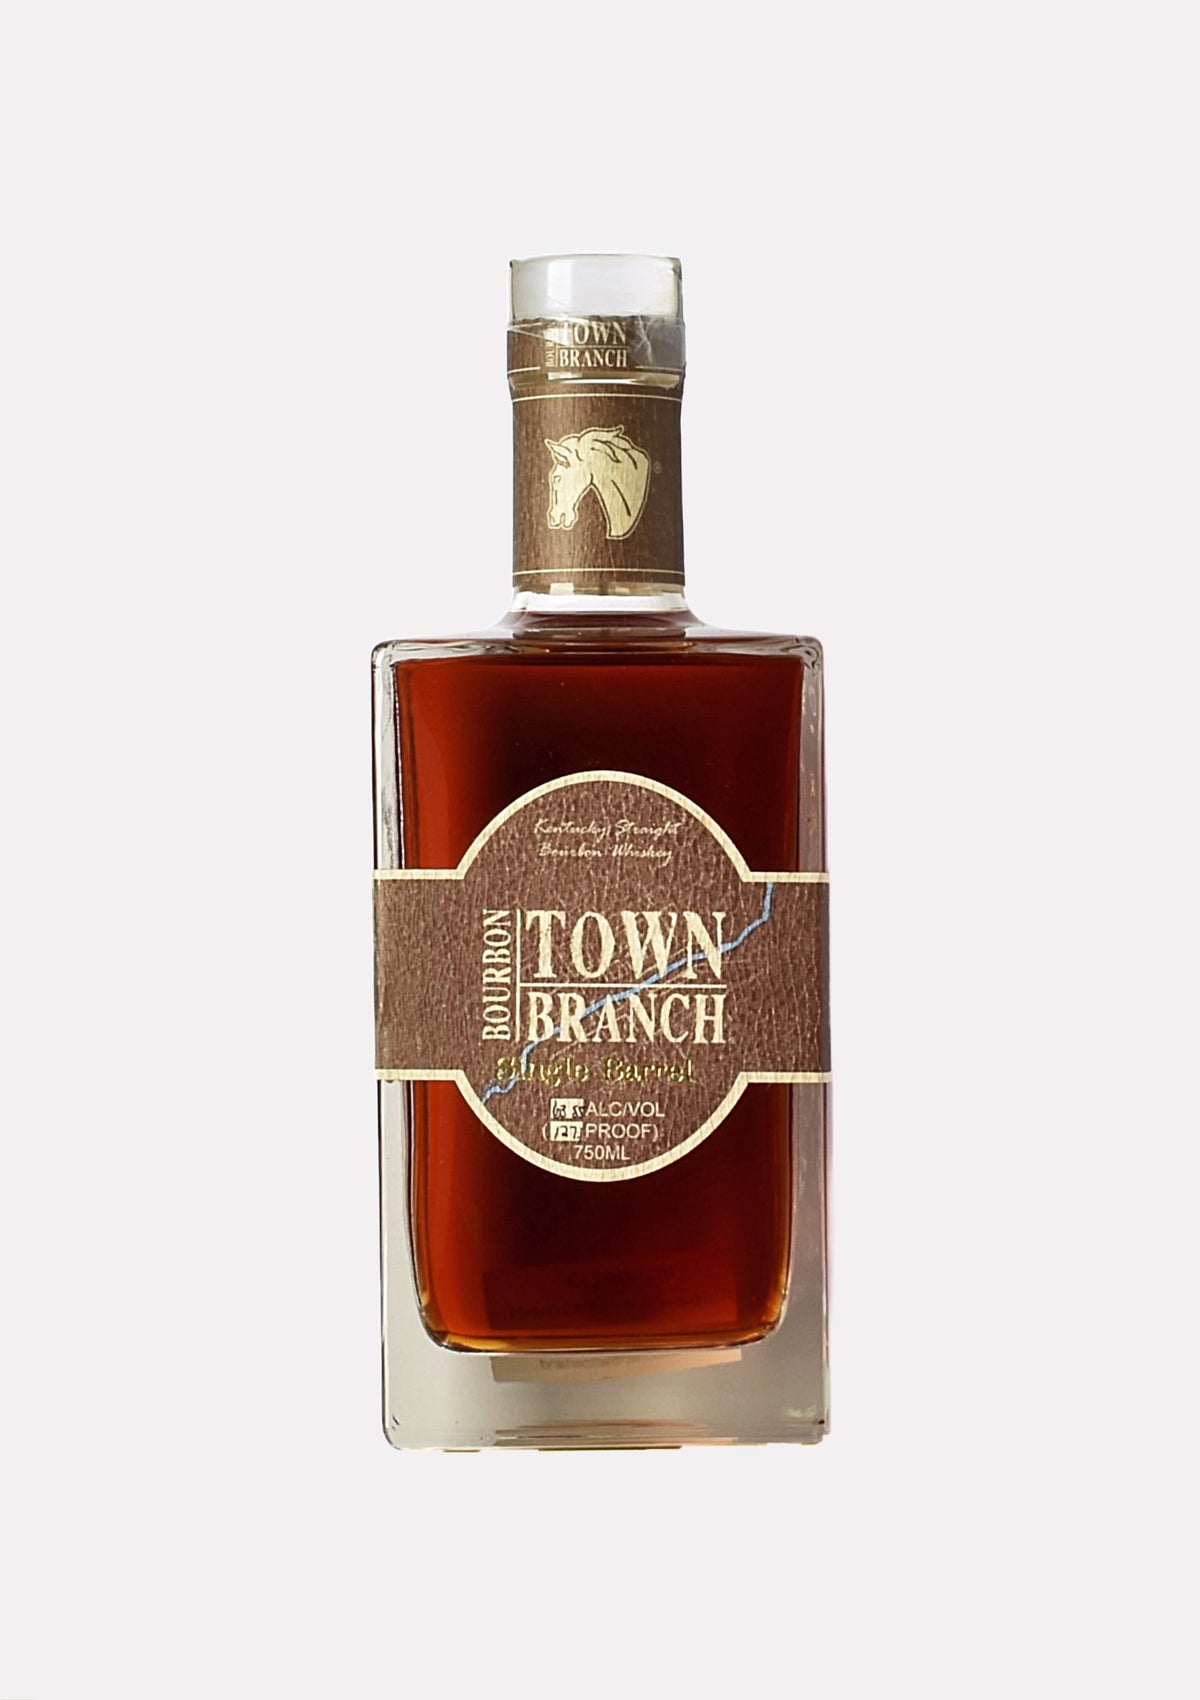 Town Branch Single Barrel Kentucky Straight Bourbon Whiskey 127.1 Proof